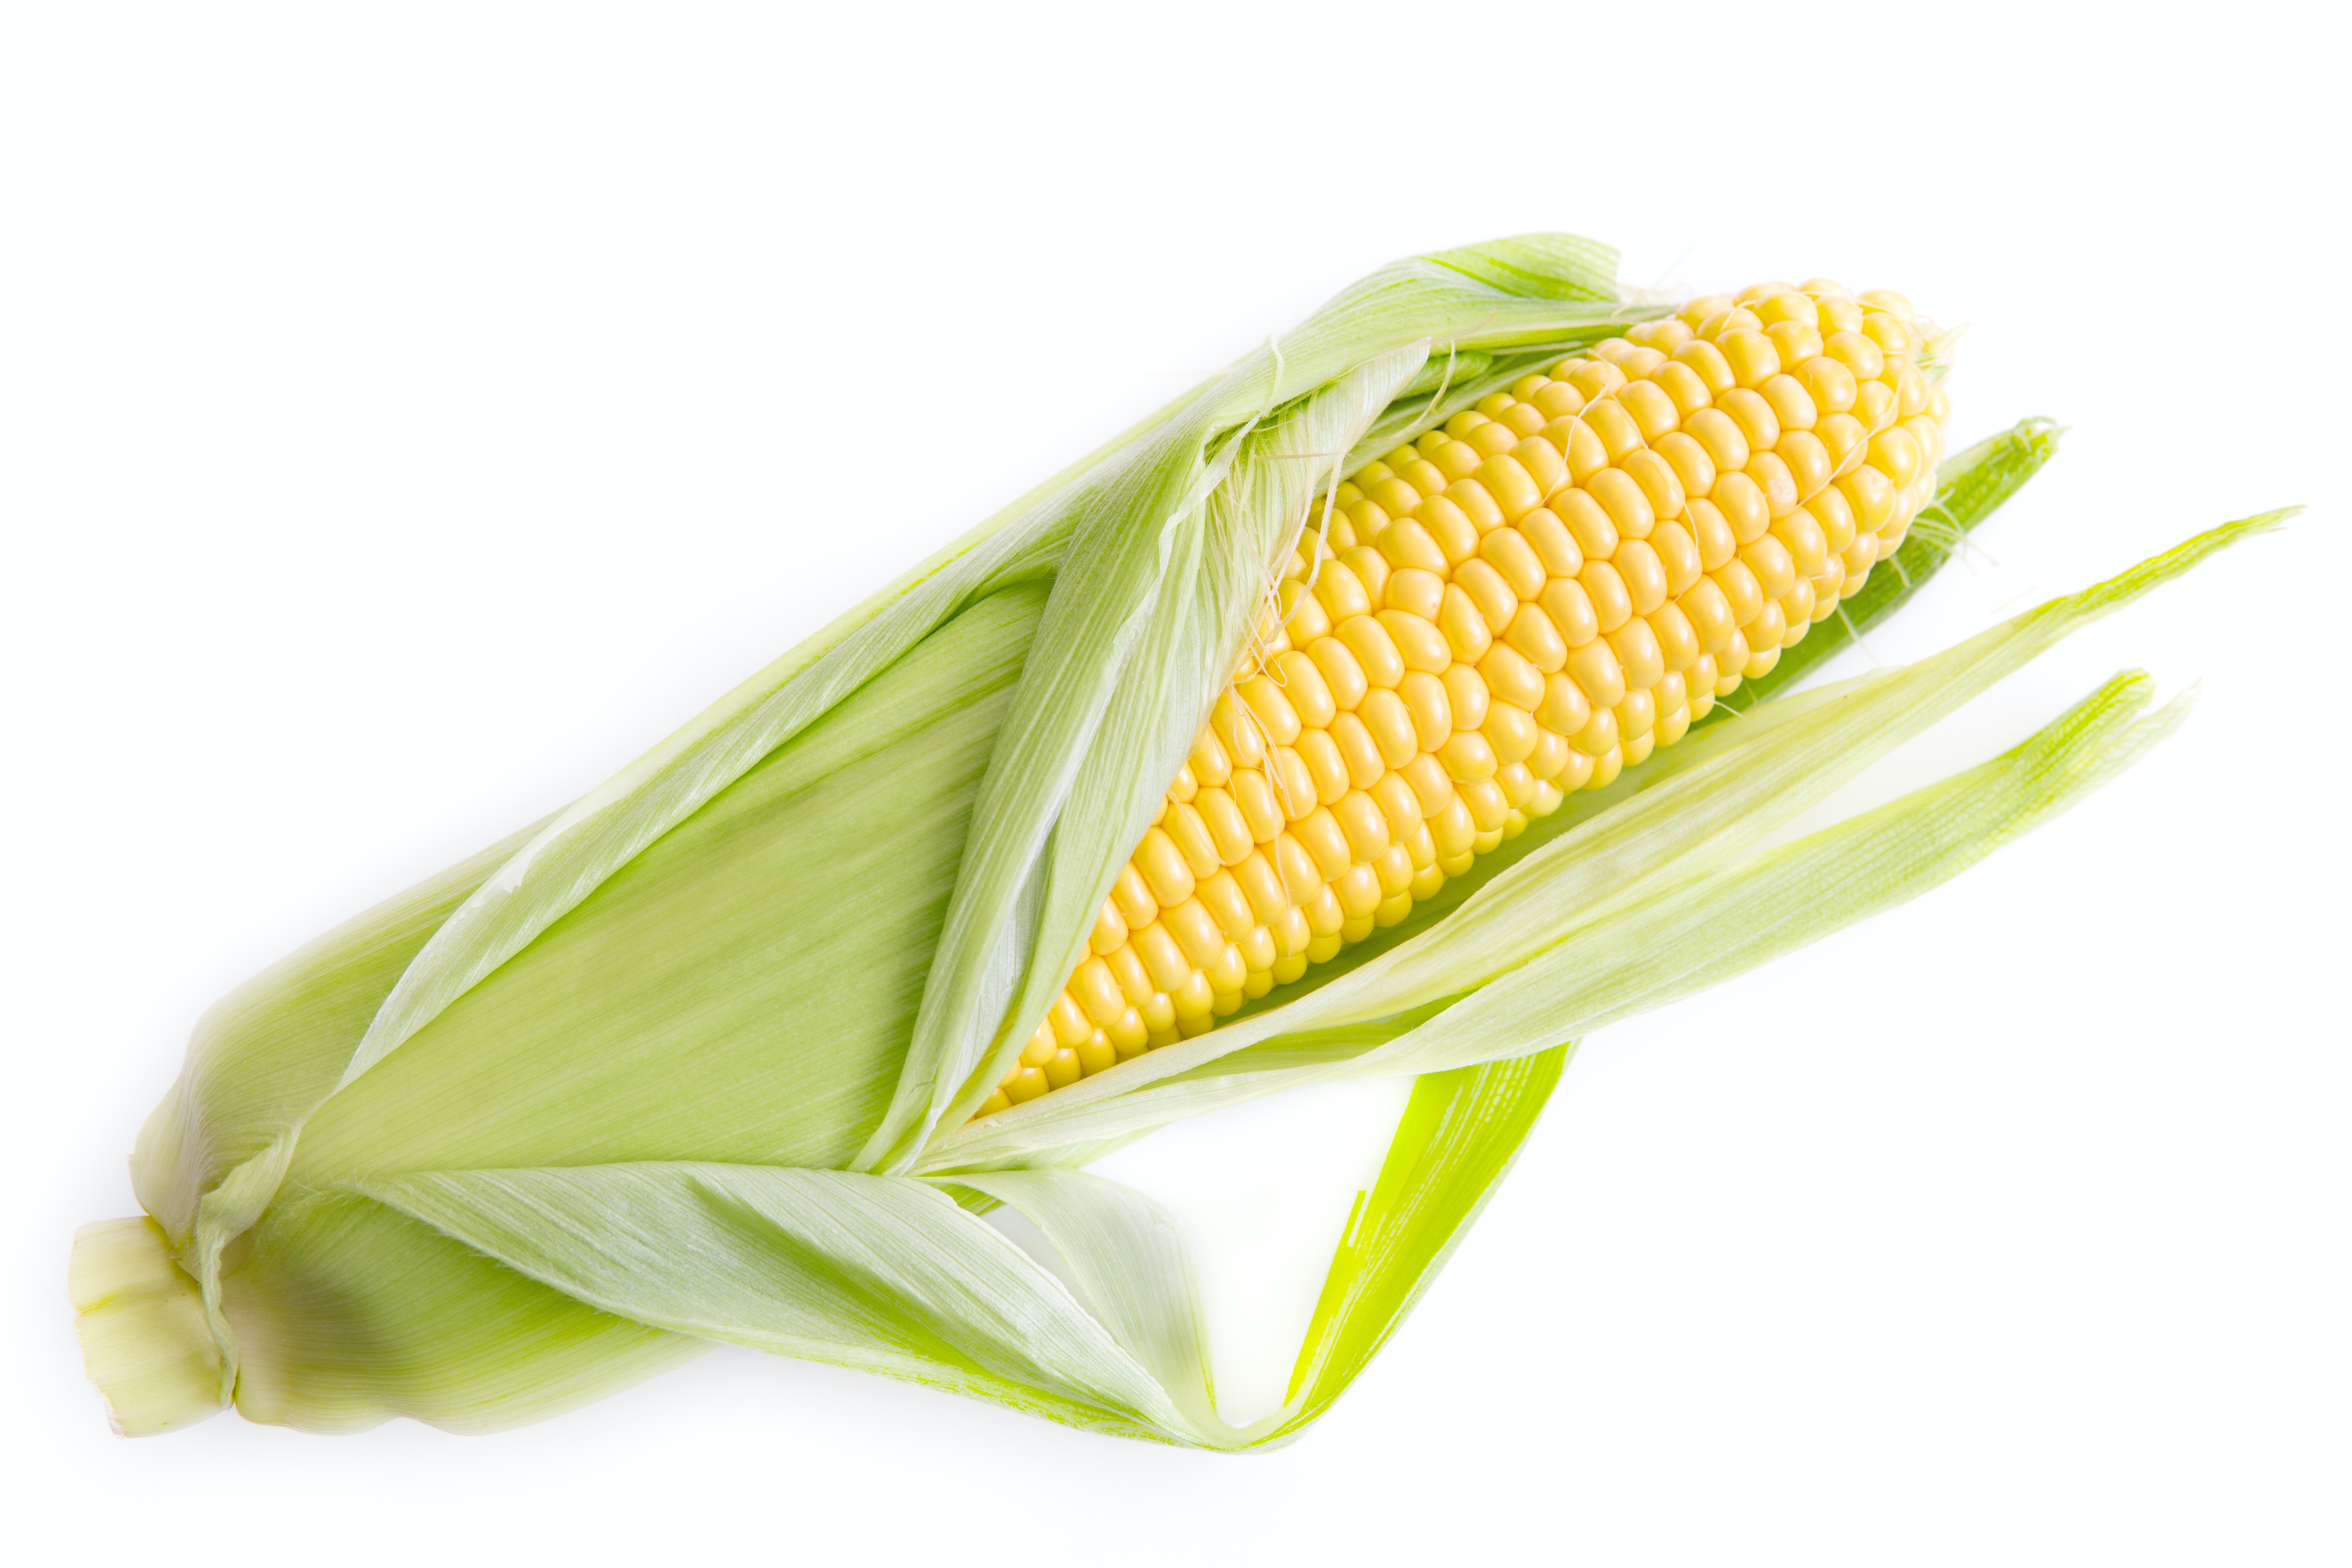 Corn на русском. Кукурузная кочерыжка. Кукуруза початок. Початки семенной кукурузы. Кукуруза майбико.